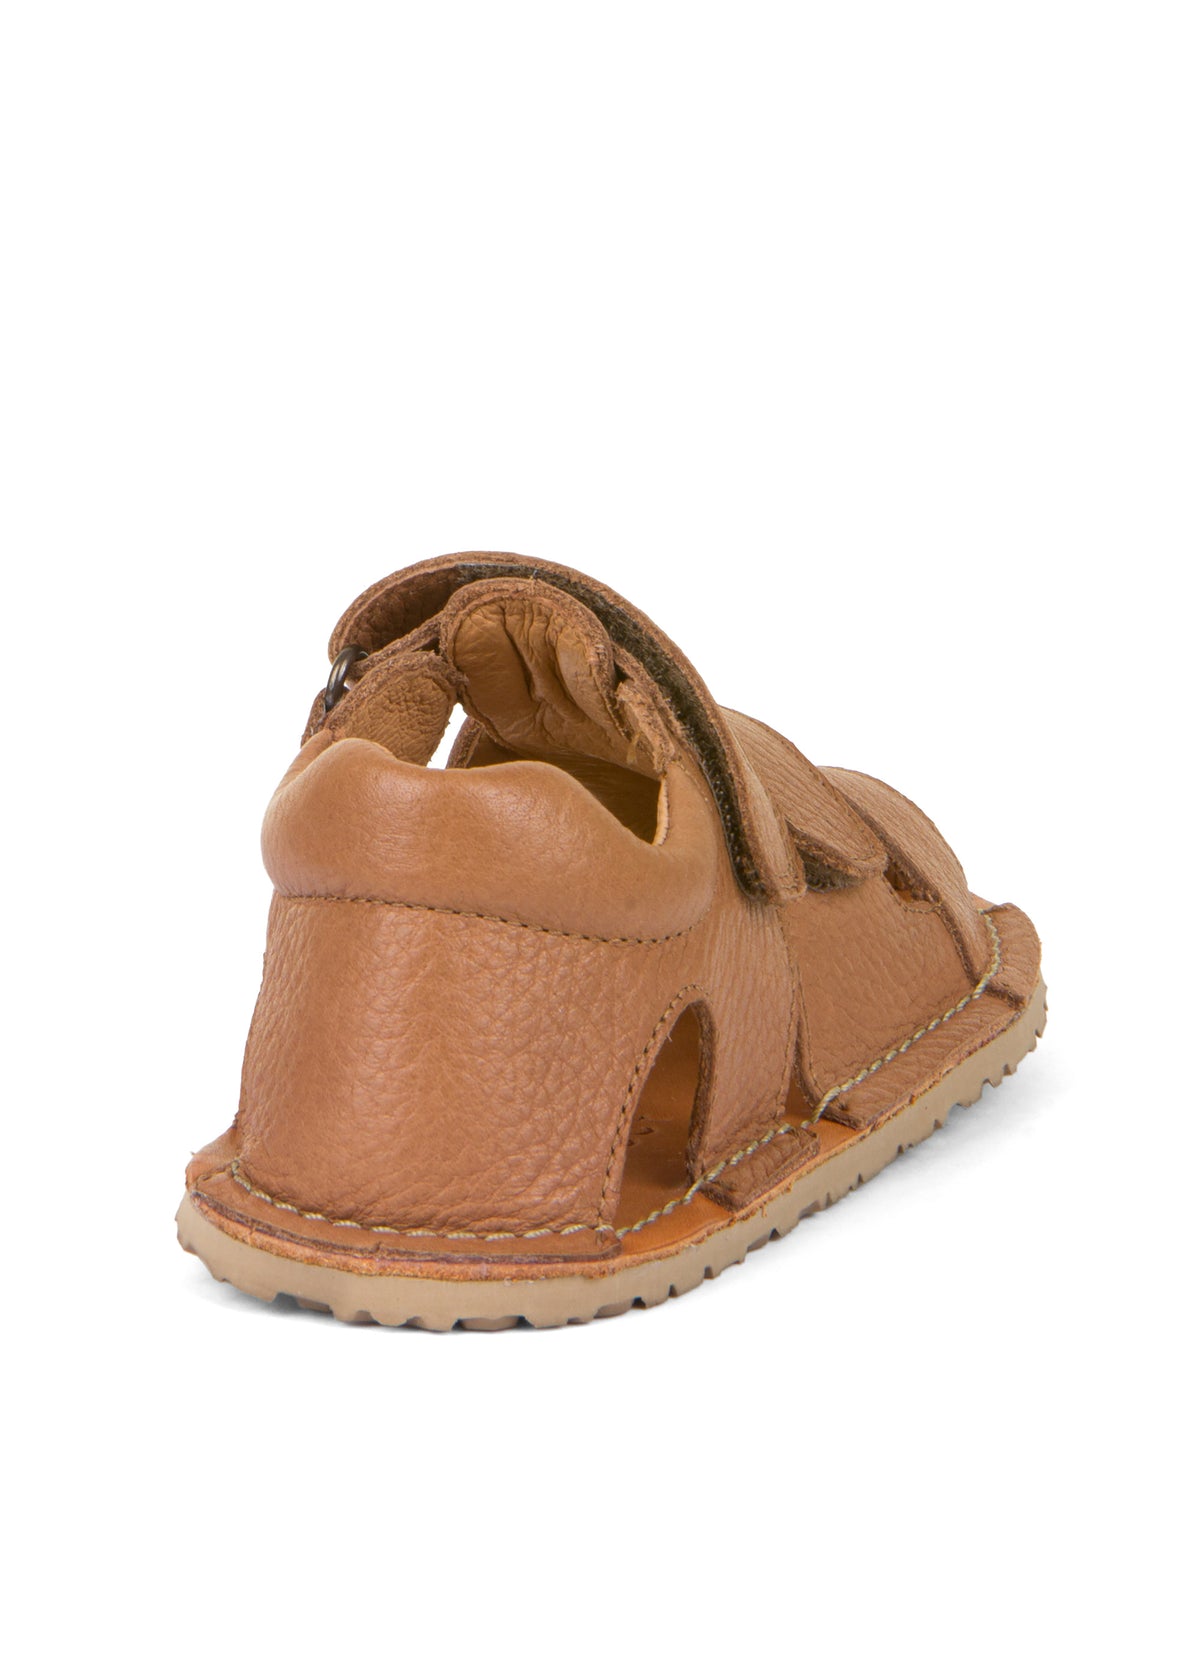 Children's barefoot sandals, Flexy Avi - cognac brown